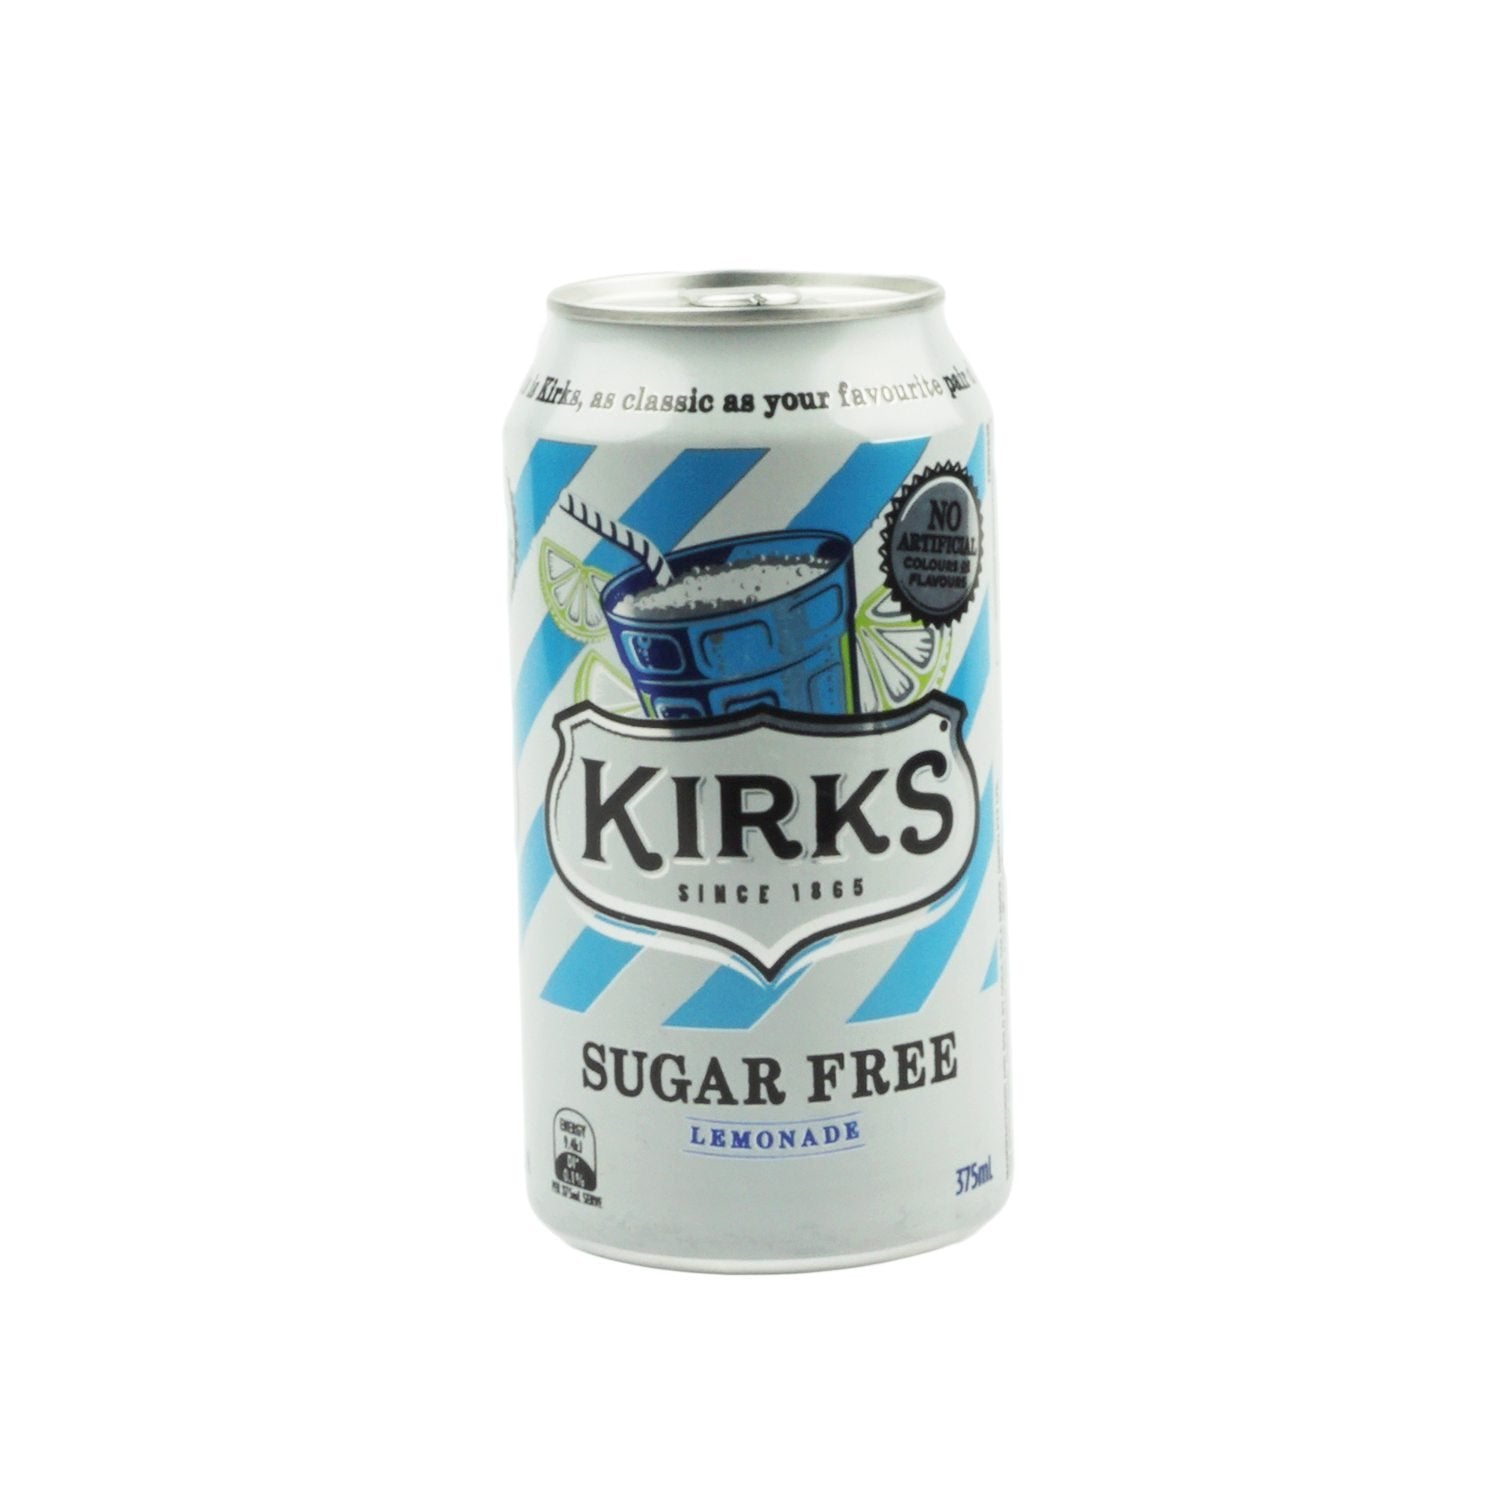 Kirks Sugar Free Lemonade 10pk cans